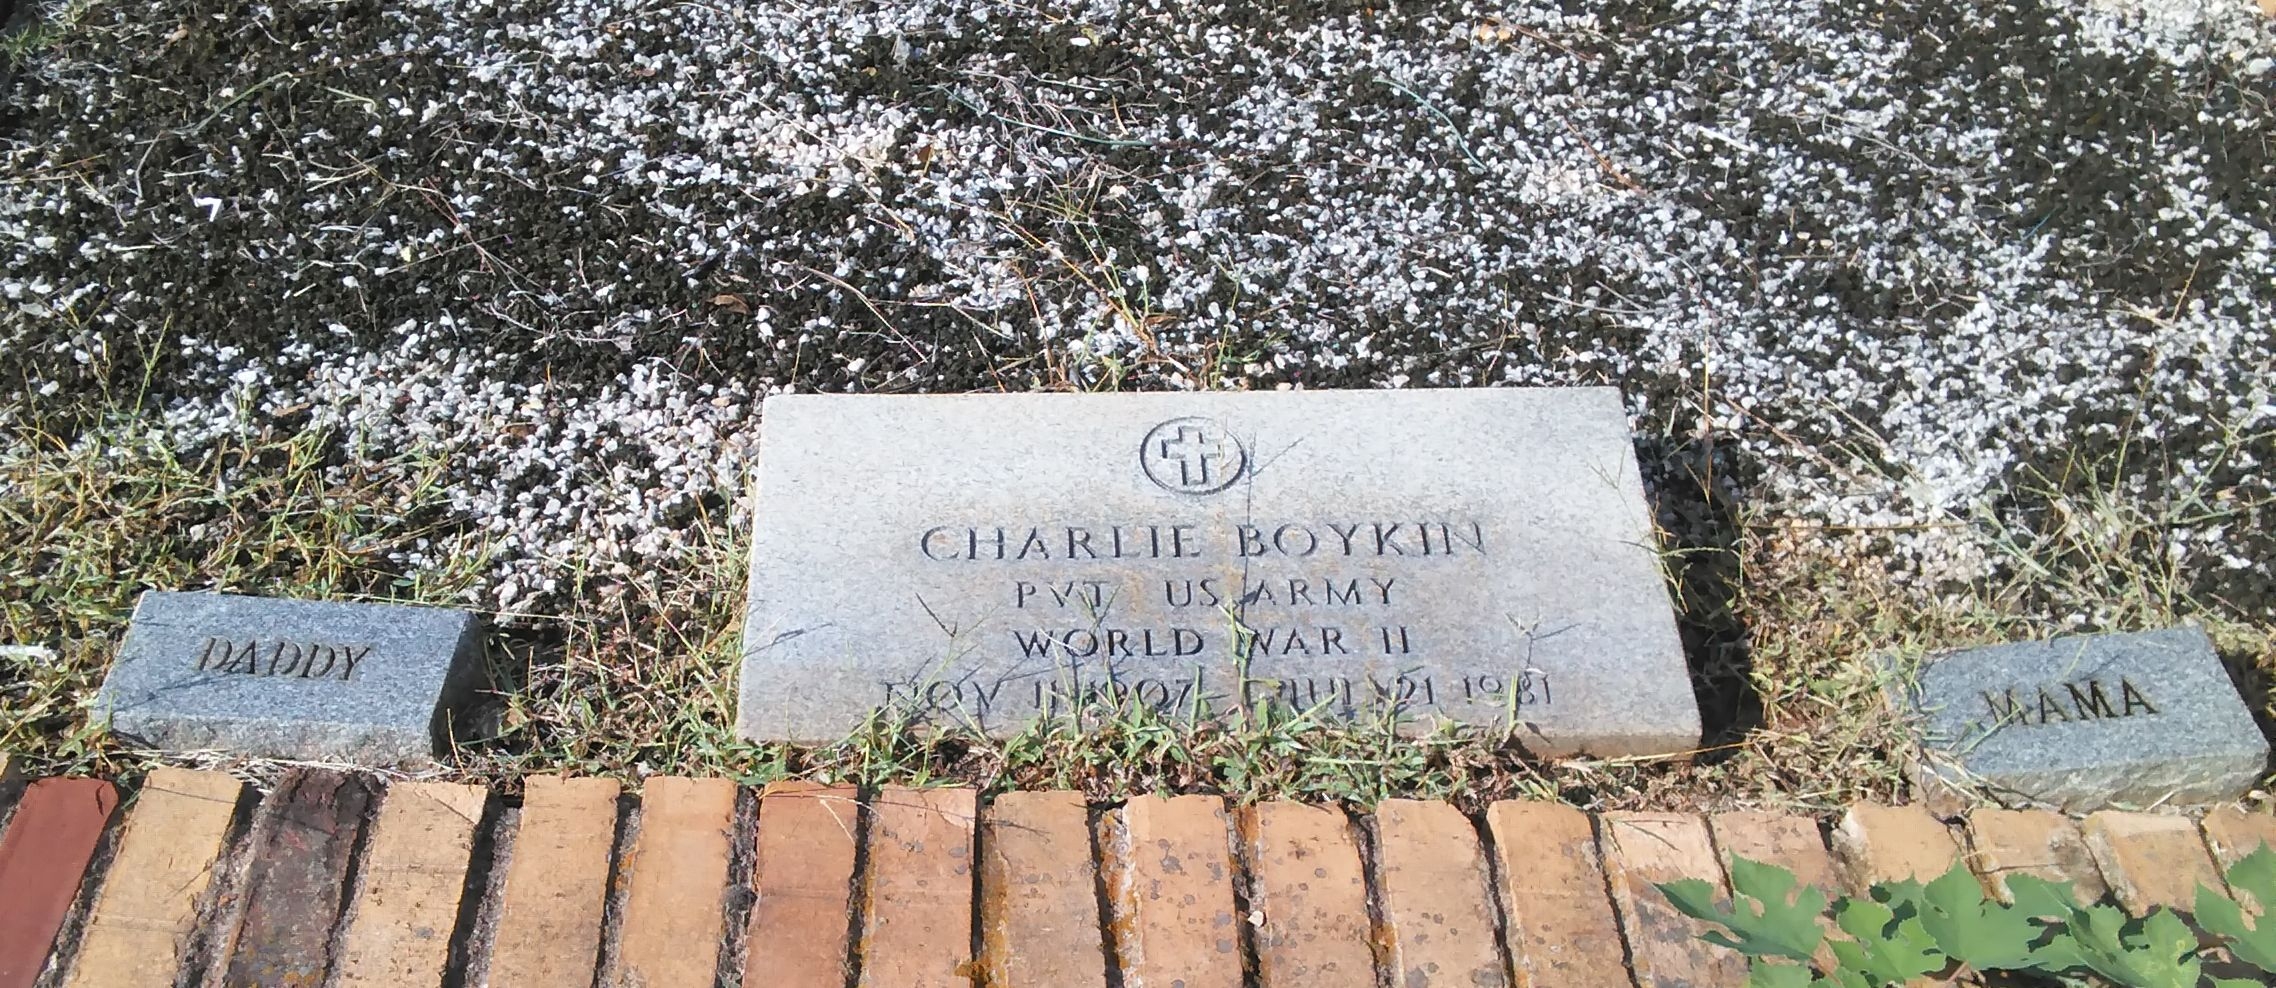 Charlie Boykin gravesite